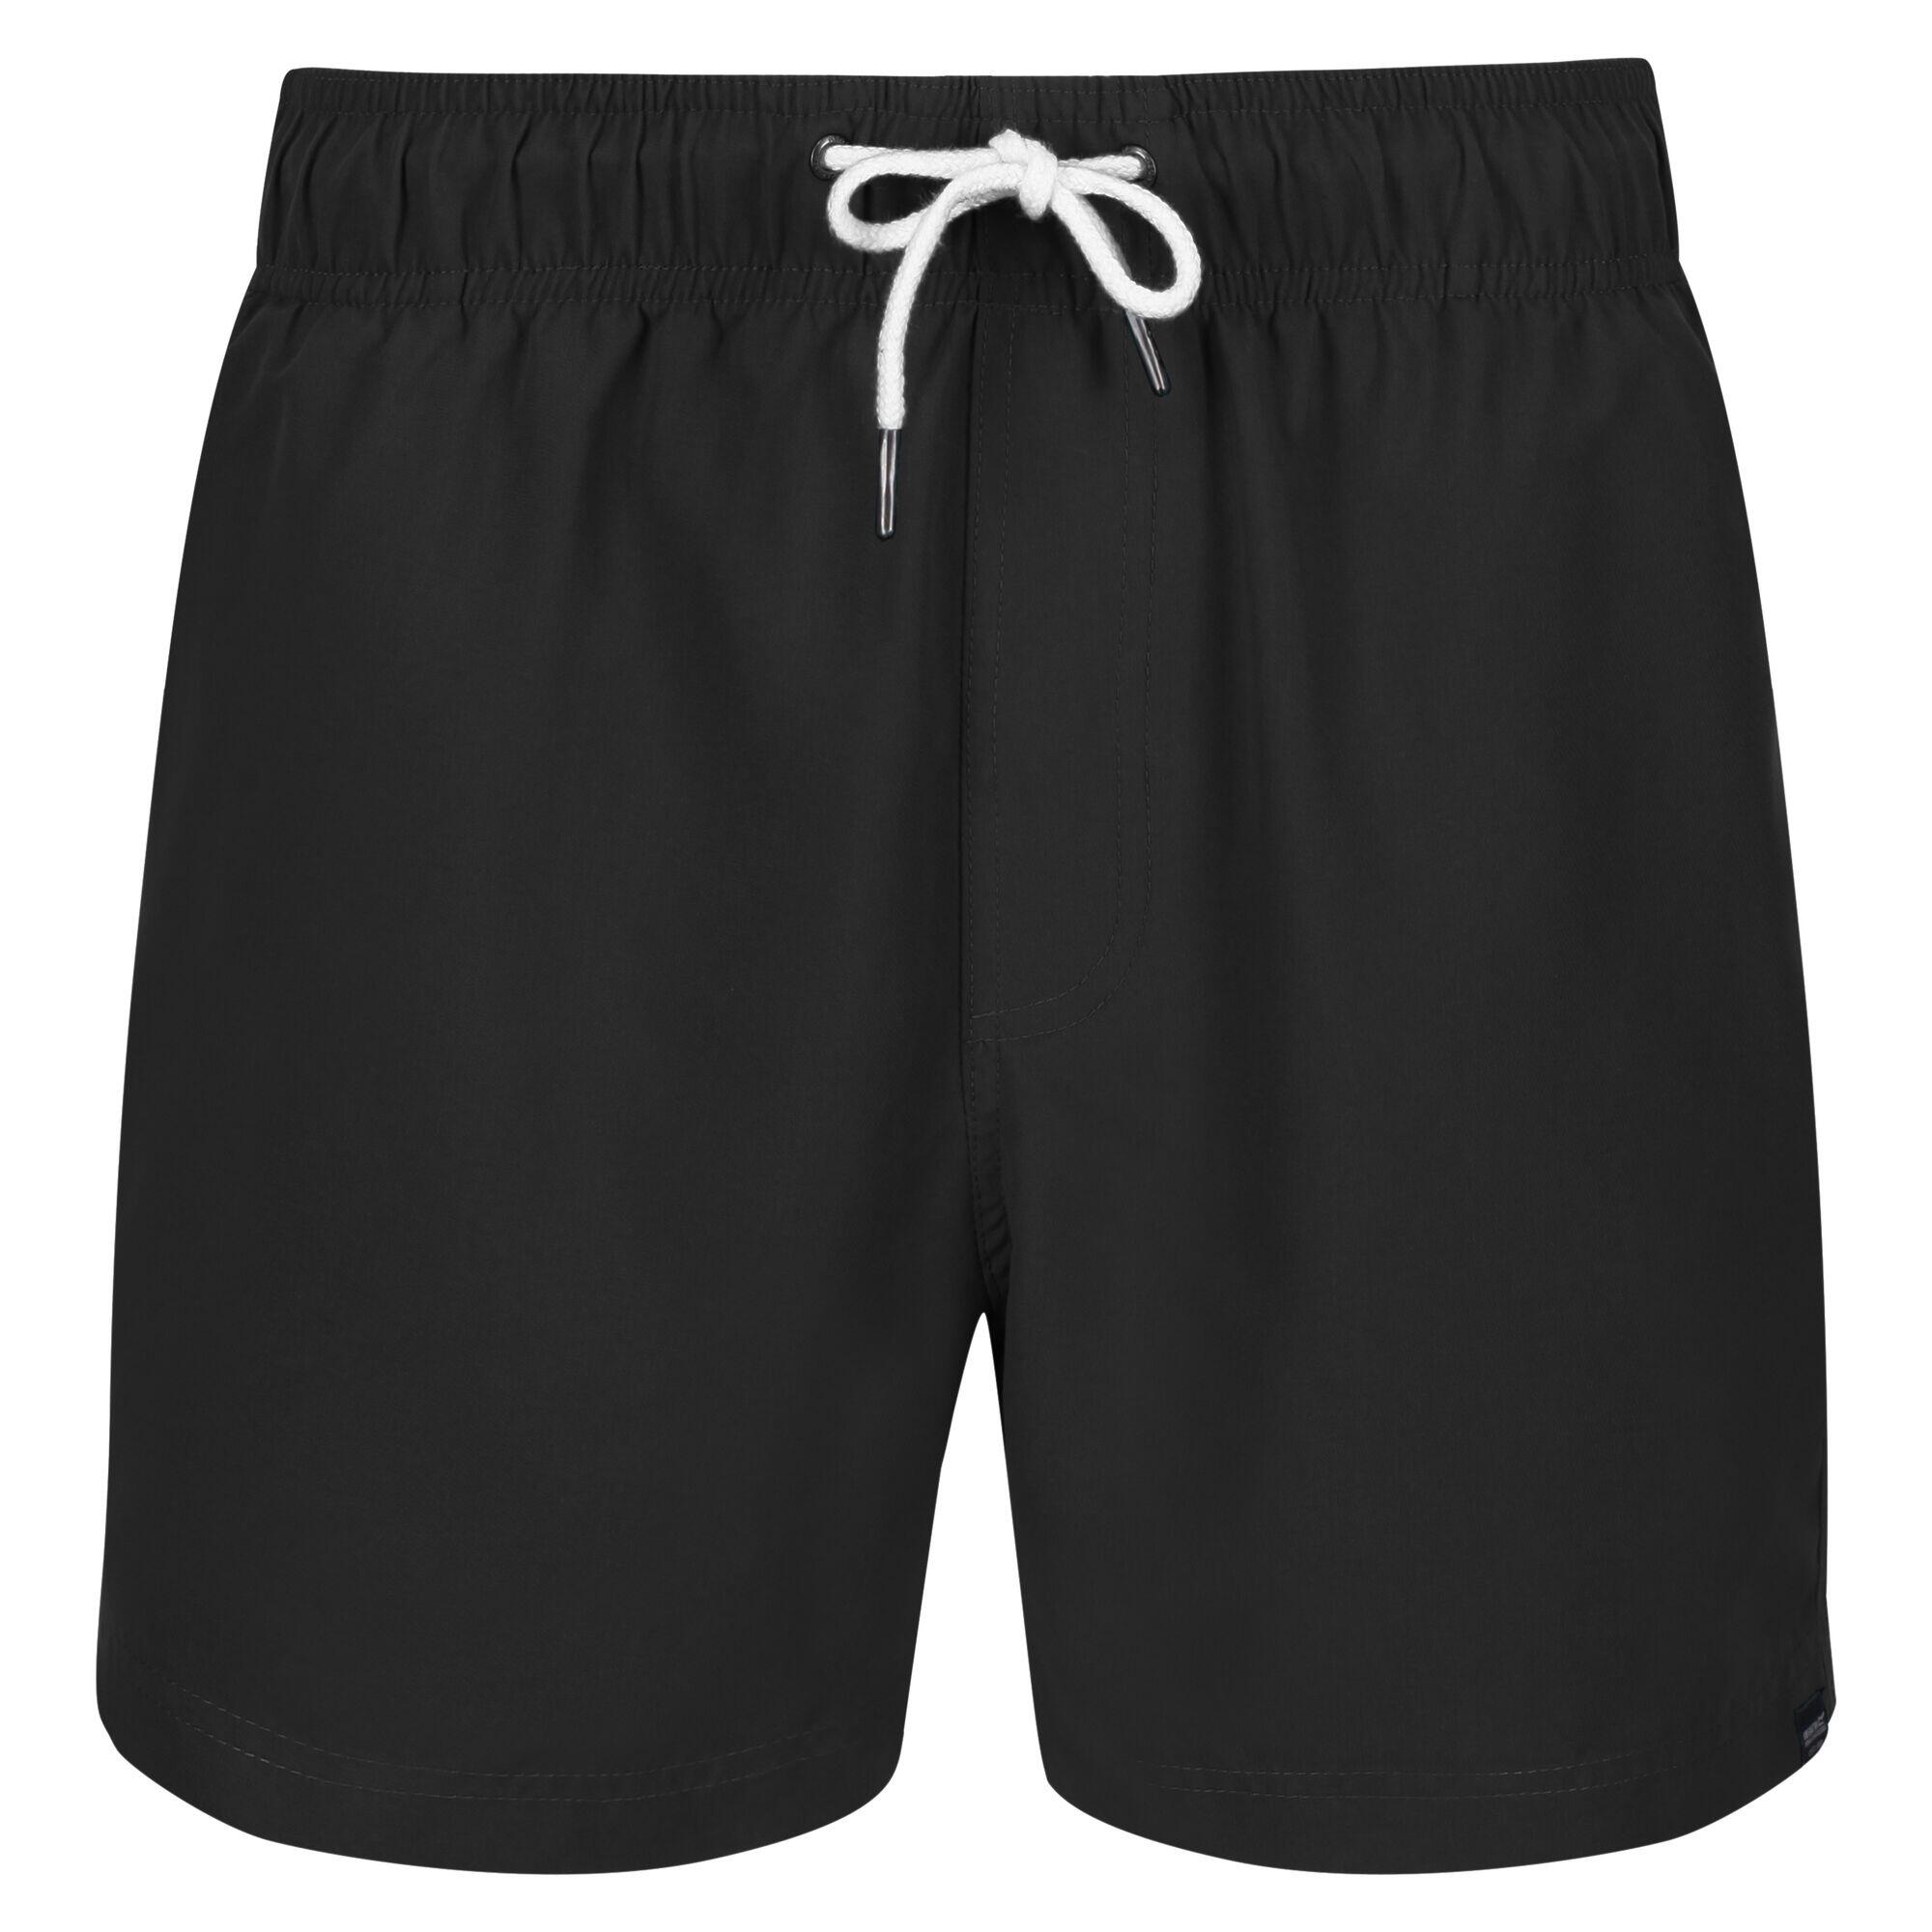 Mawson II Men's Swim Shorts - Black 5/5